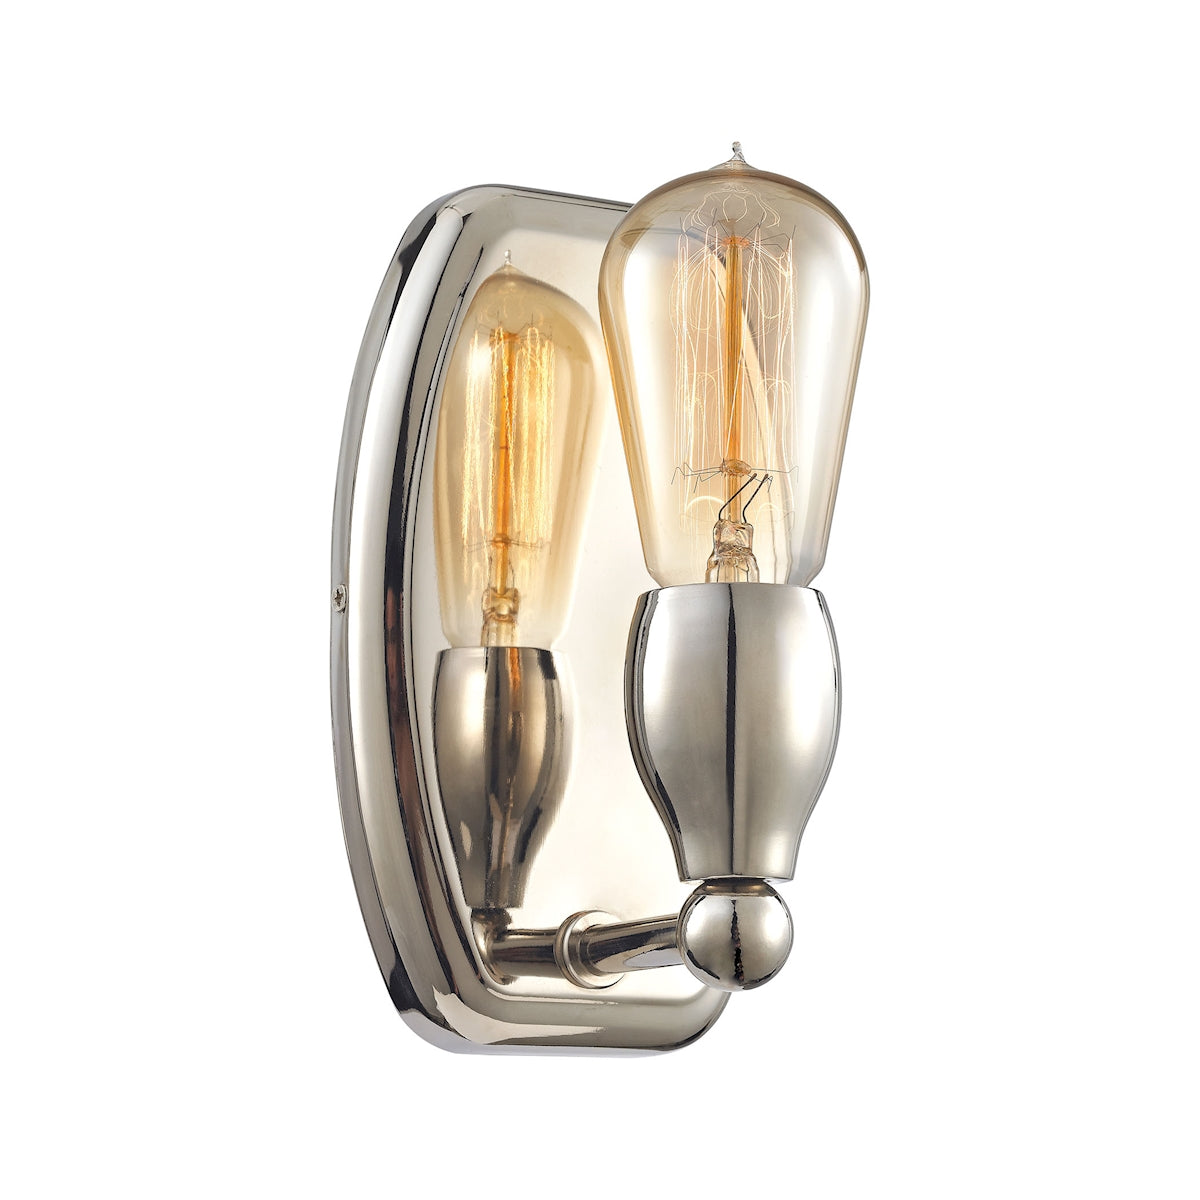 ELK Lighting 31970/1 Vernon 1-Light Vanity Lamp in Polished Nickel